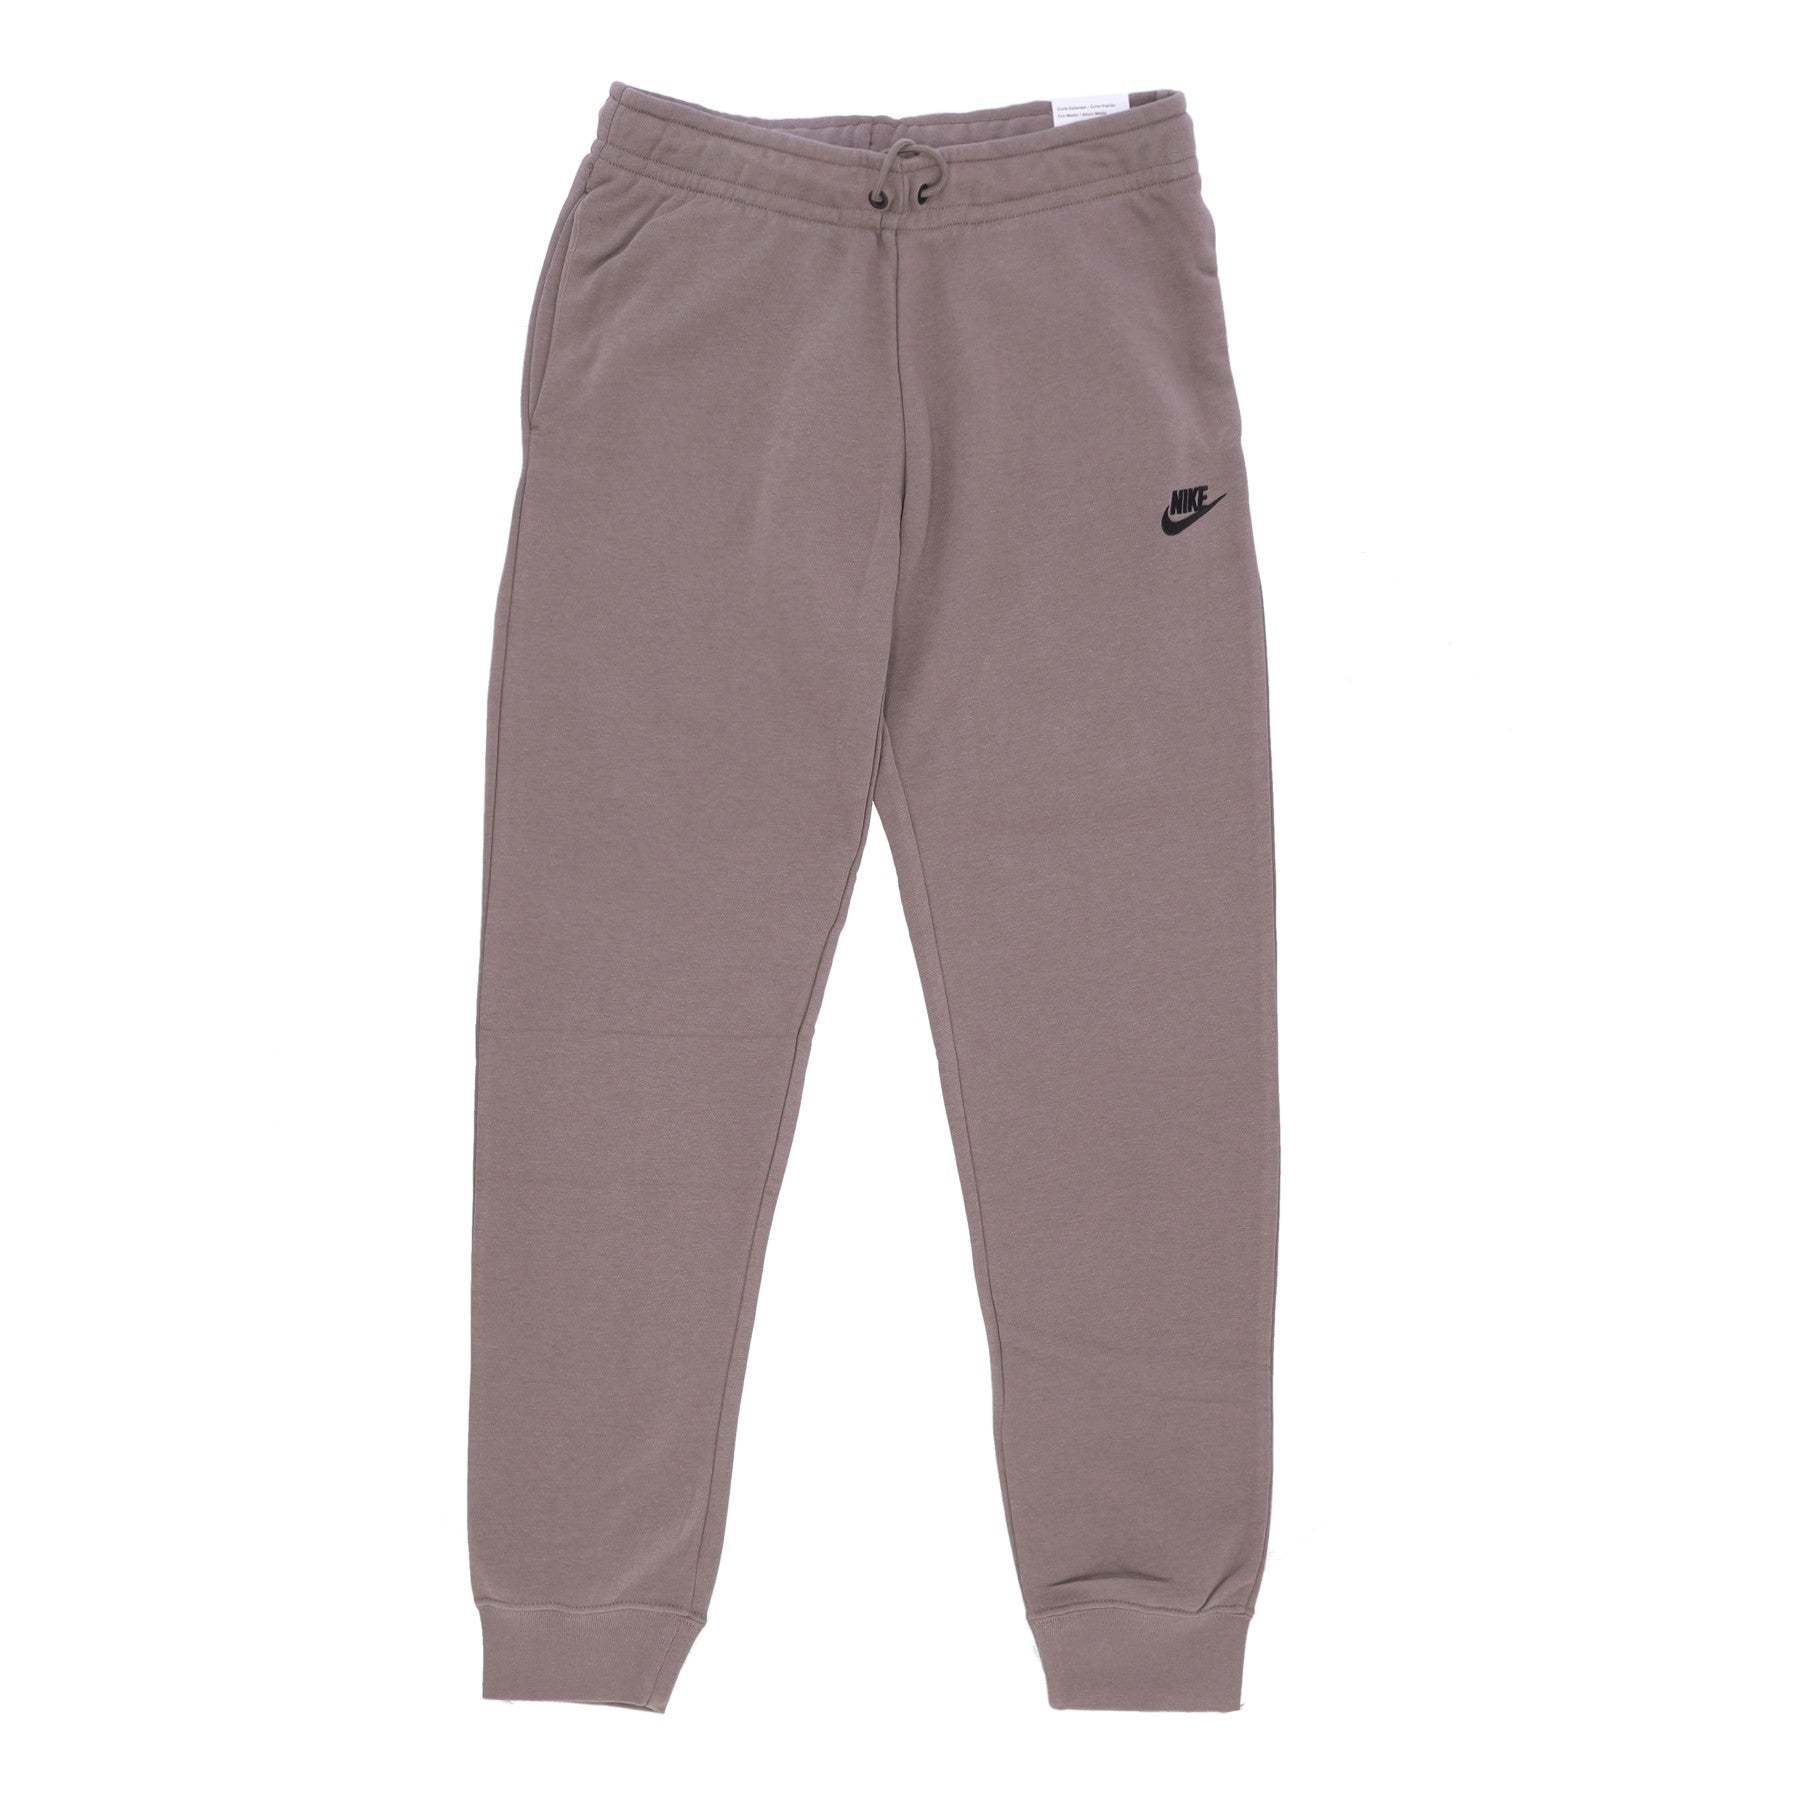 Nike, Pantalone Tuta Felpato Donna Sportswear Essential Pant Reg Fleece, Olive Grey/black